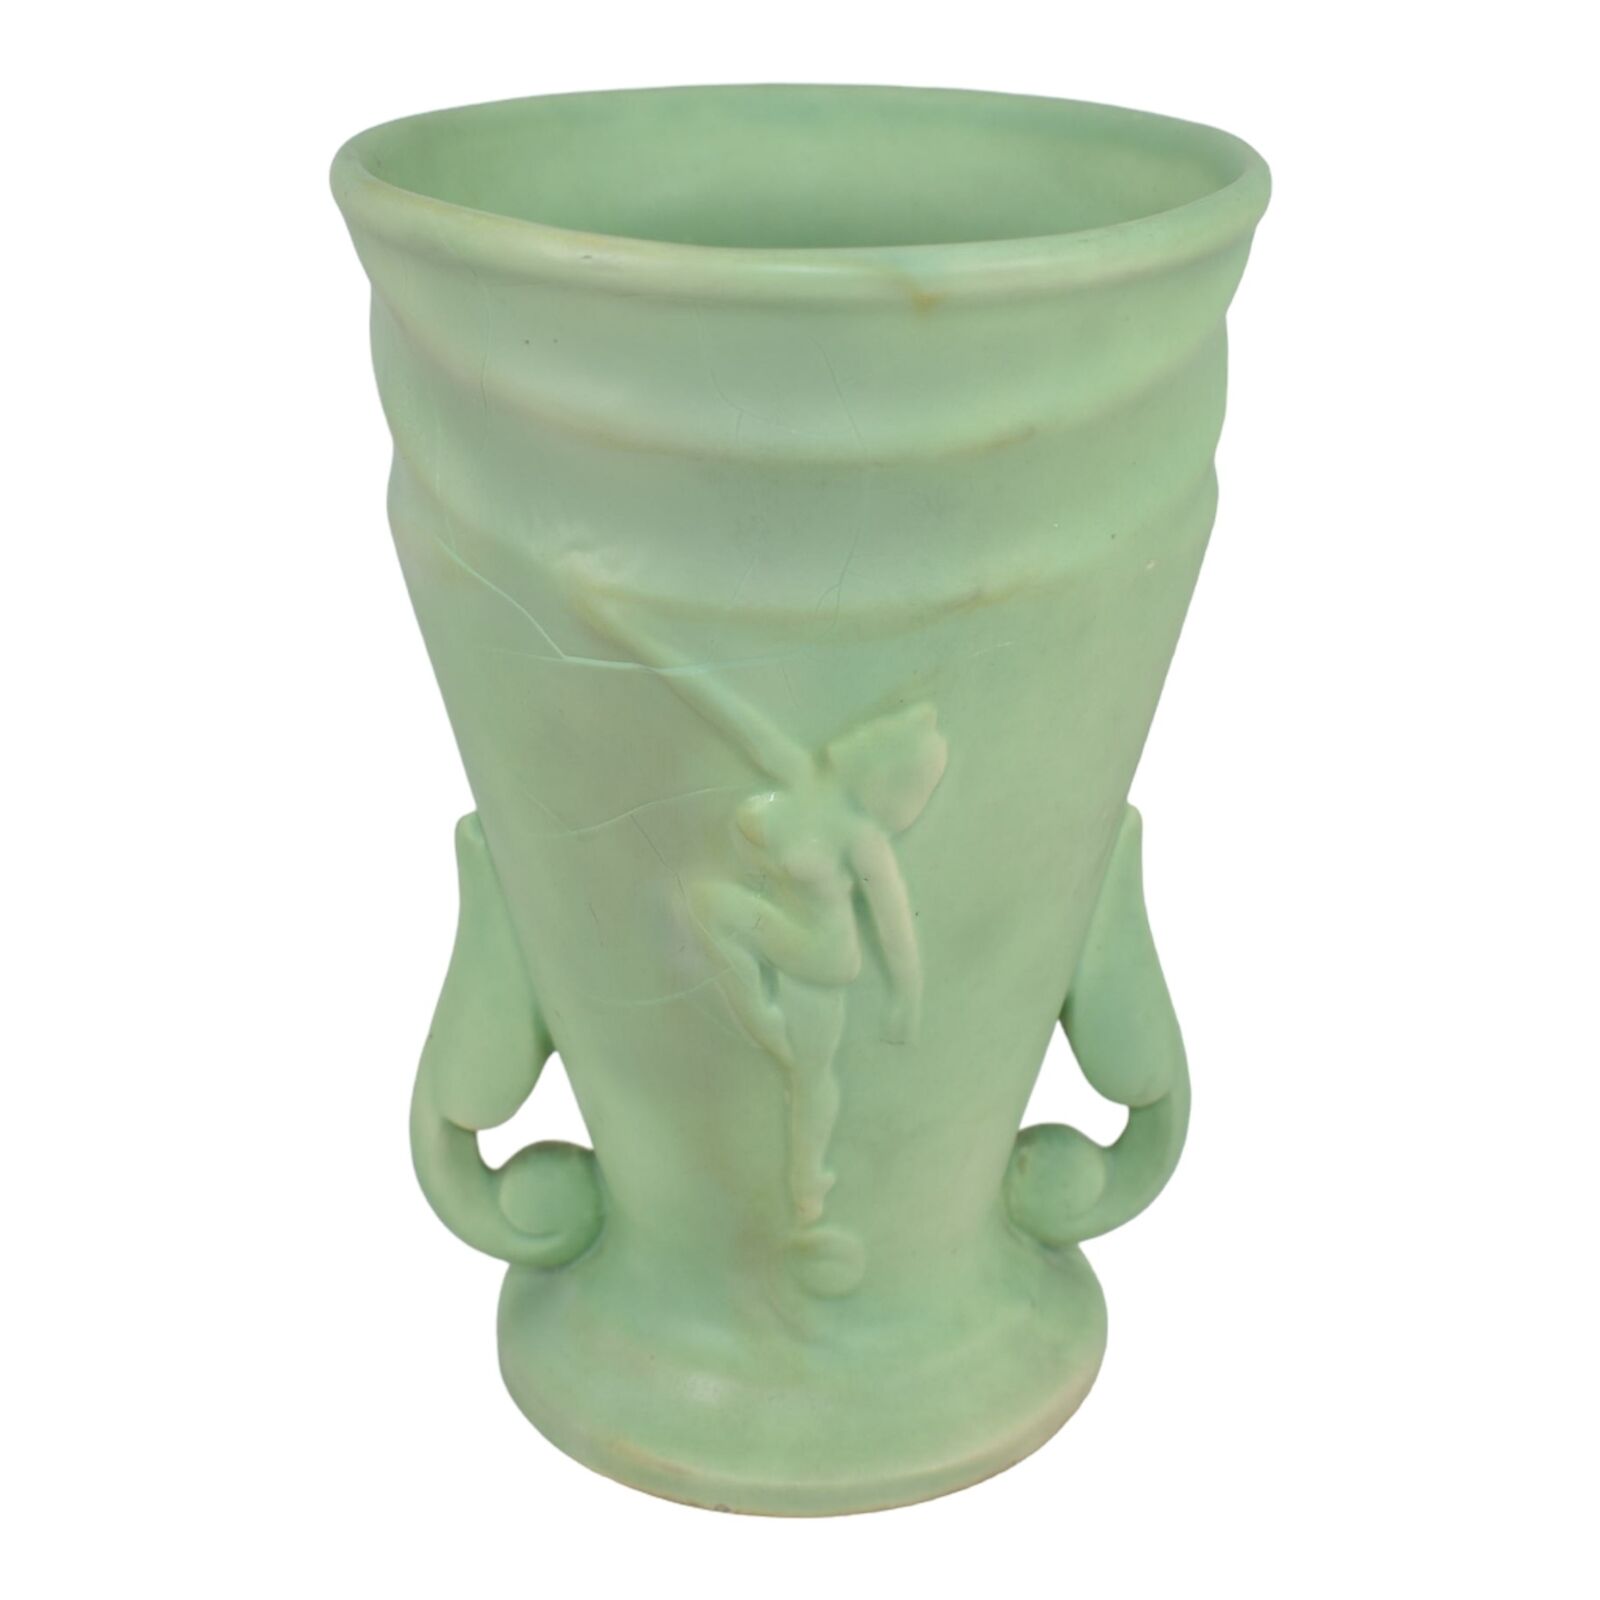 Rumrill 1930s Vintage Art Deco Pottery Green Nude Ceramic Flower Vase H-24